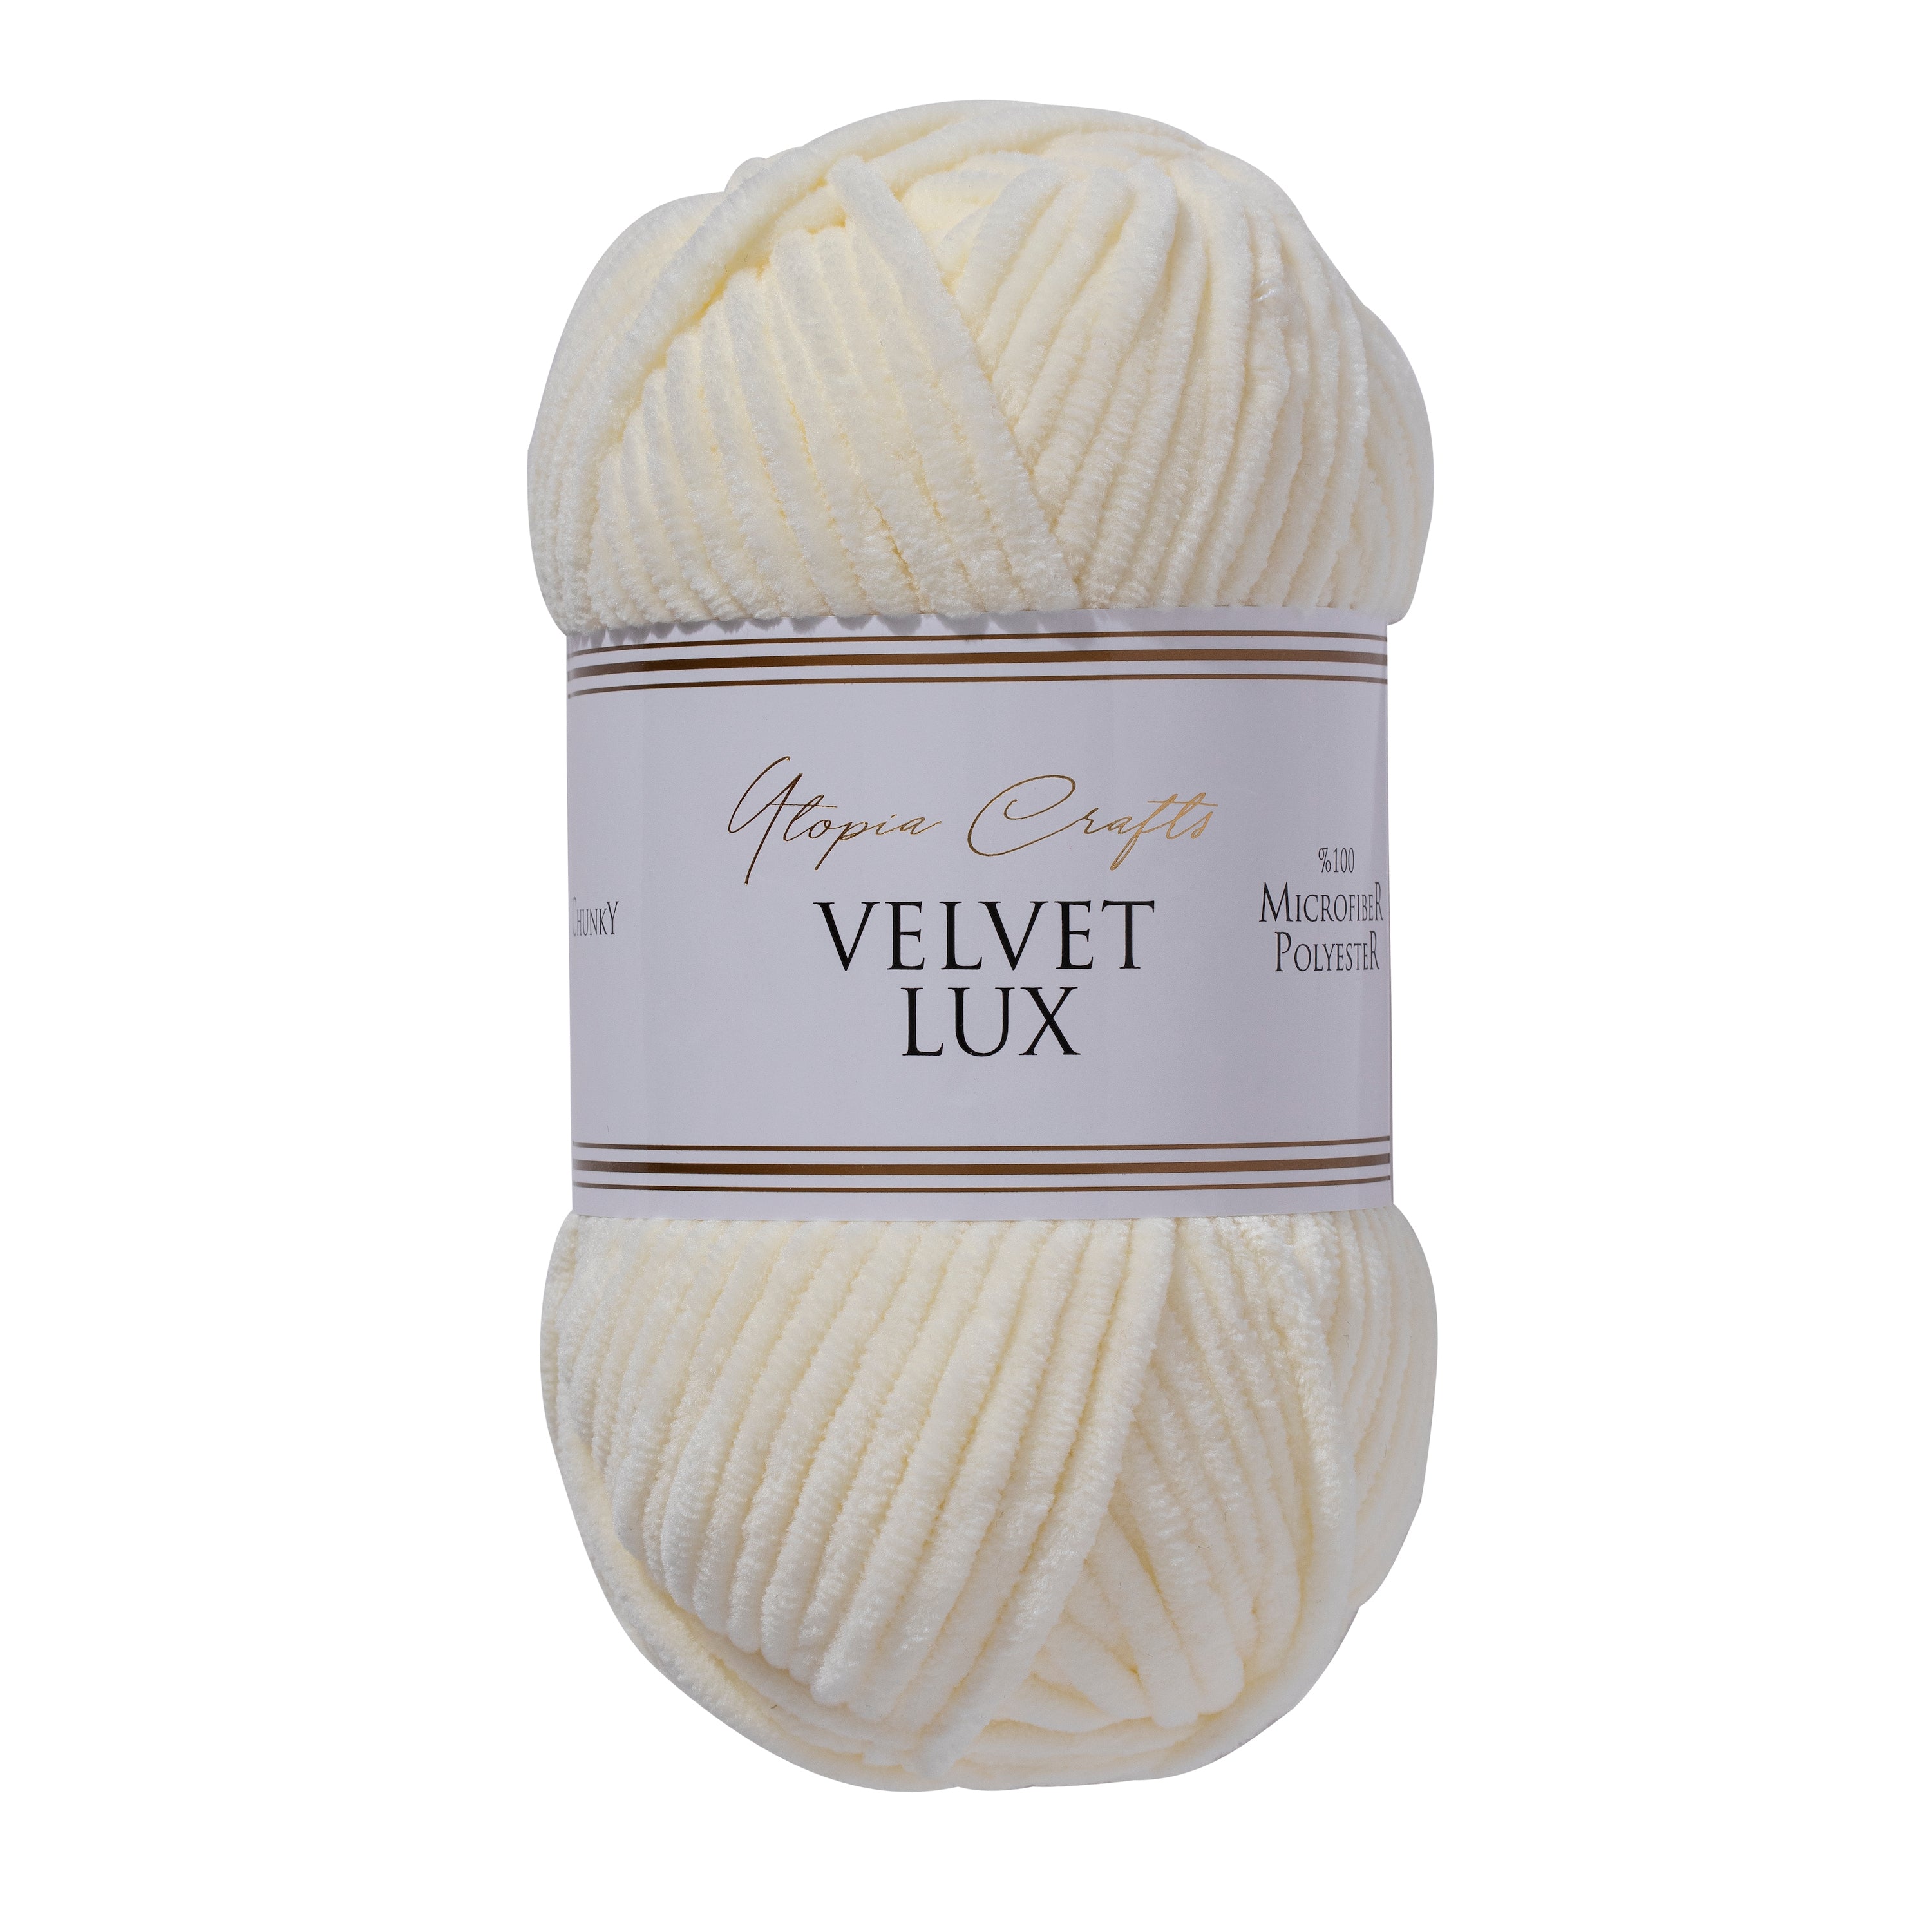 Utopia Crafts Velvet Lux Chenille Super Soft Chunky Yarn for Knitting and Crochet, 100g - 110m (Ivory)